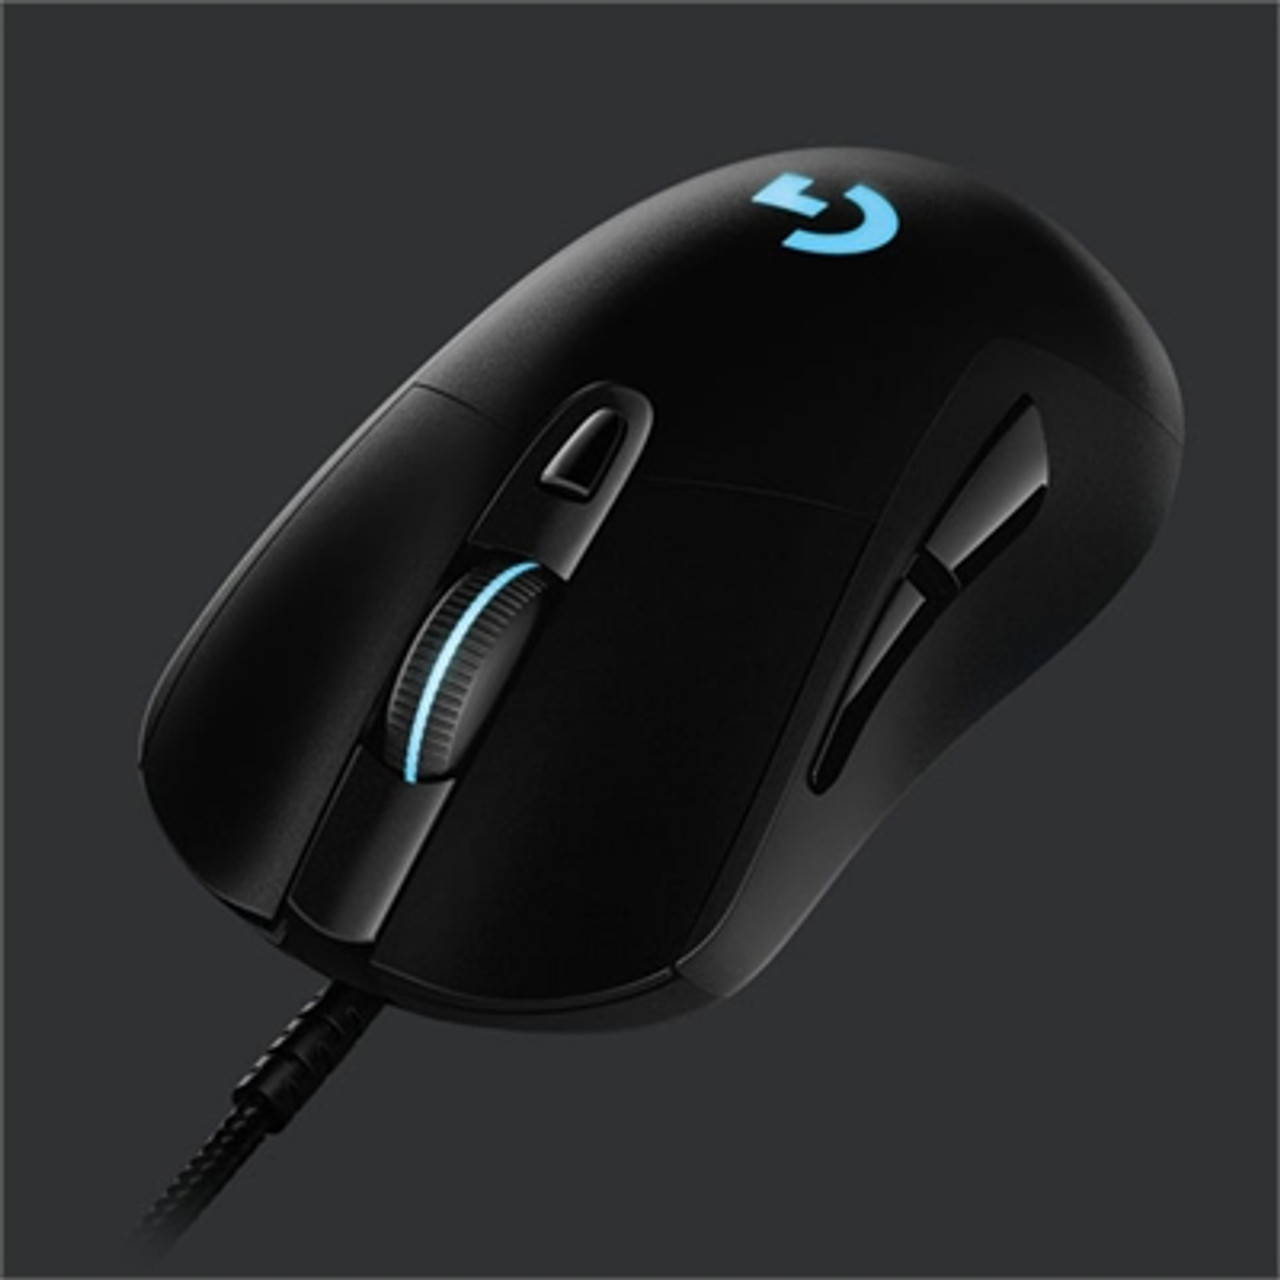 Logitech Gaming Mouse G403 HERO - mouse - USB - black